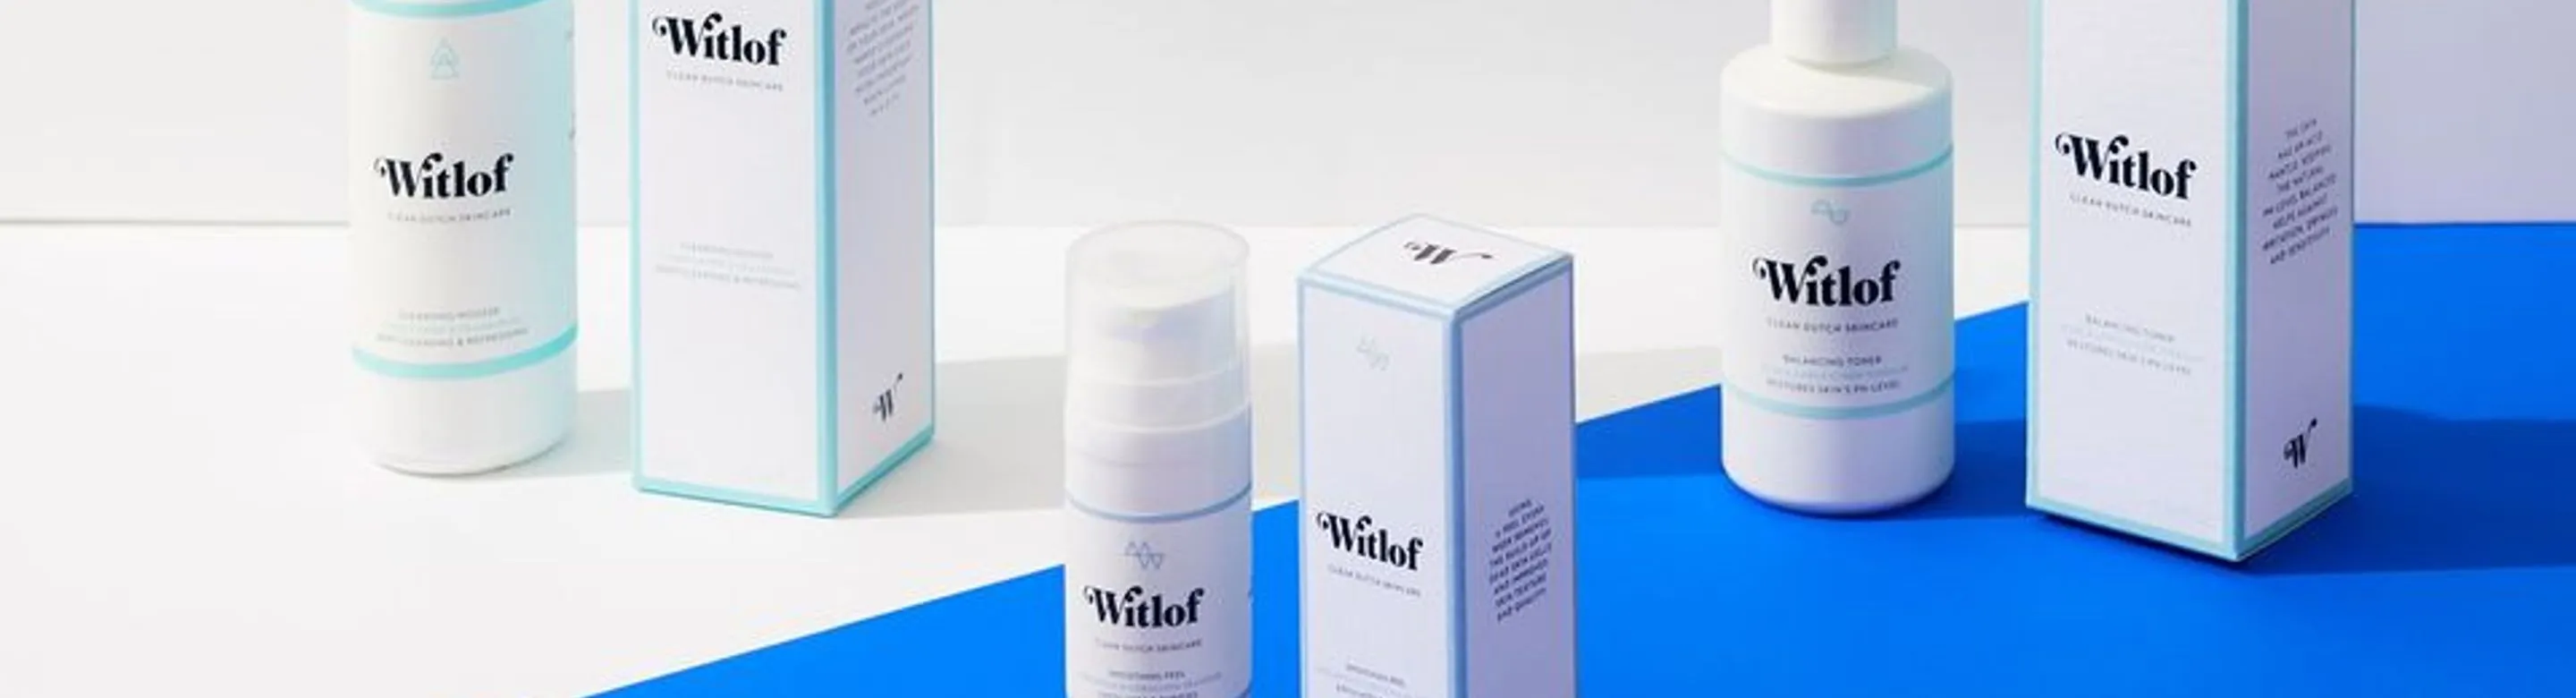 Witlof Skincare